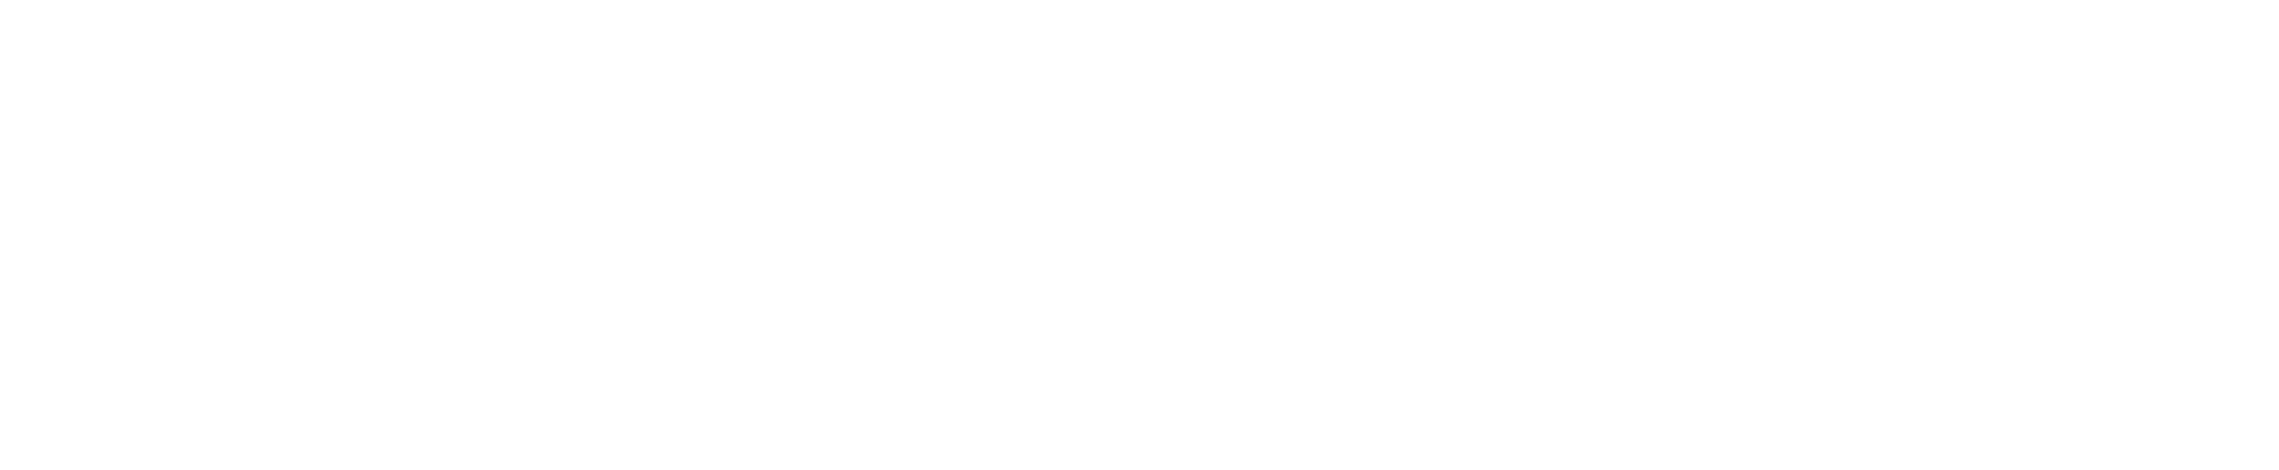 Consignment Gallery & Estate Sales logo